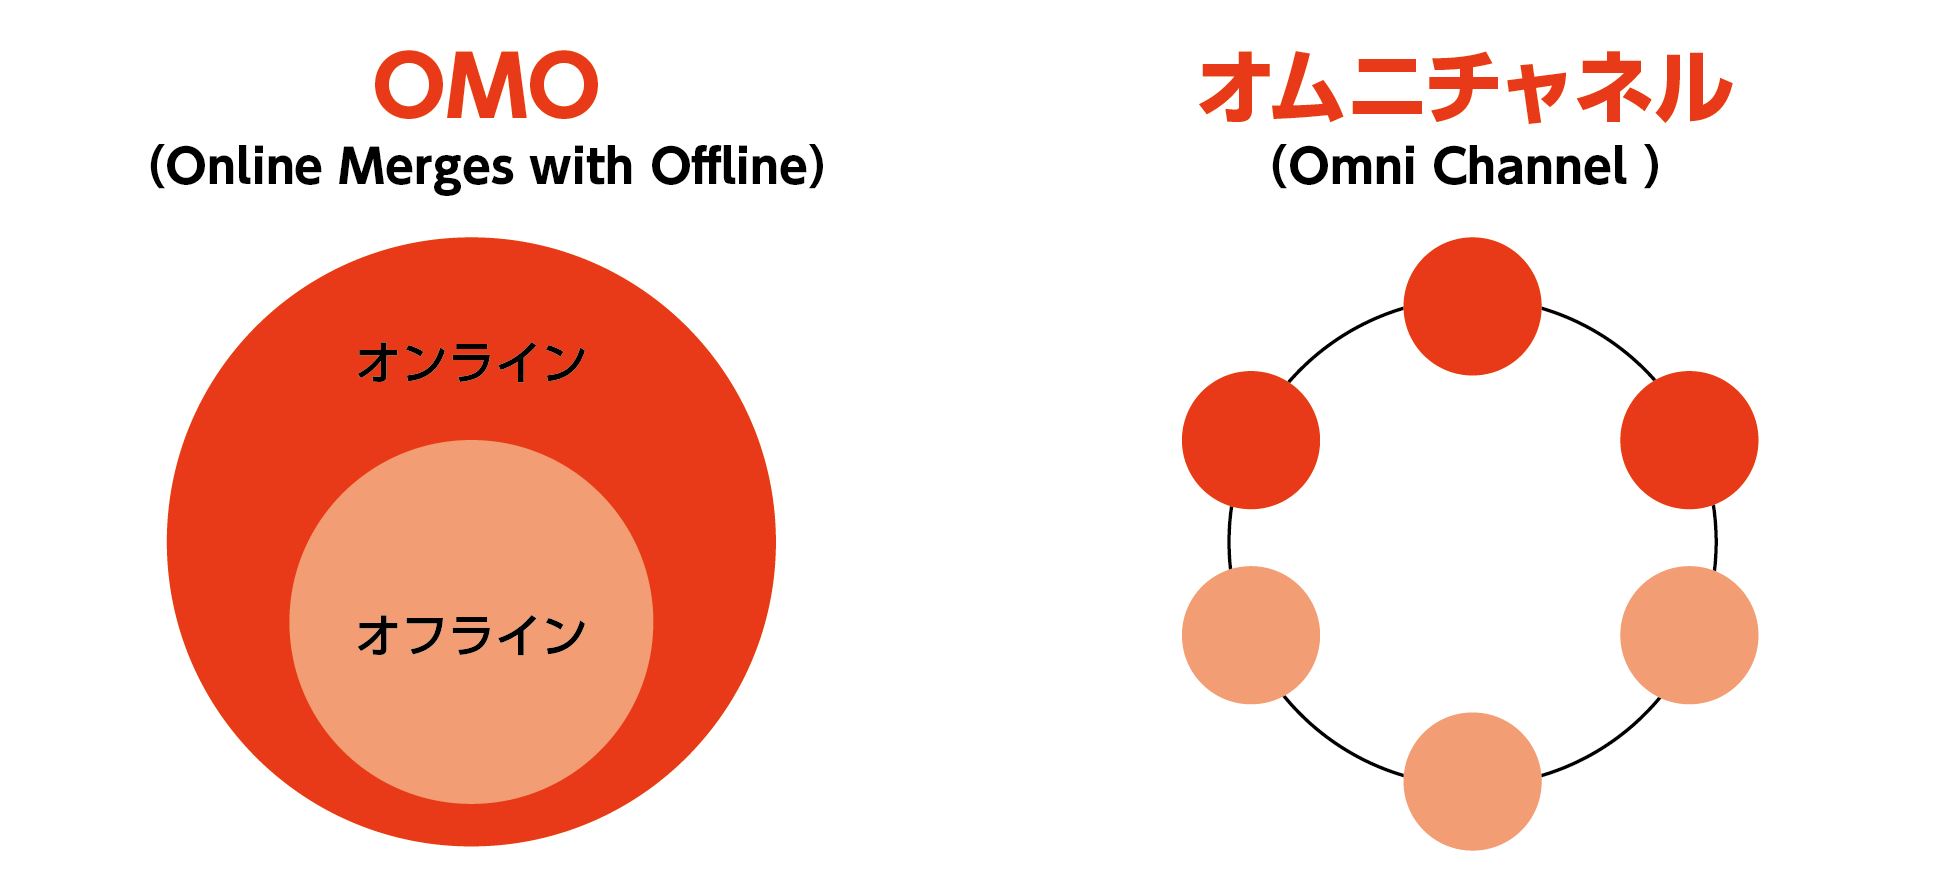 「OMO」と「オムニチャネル」のイメージ画像